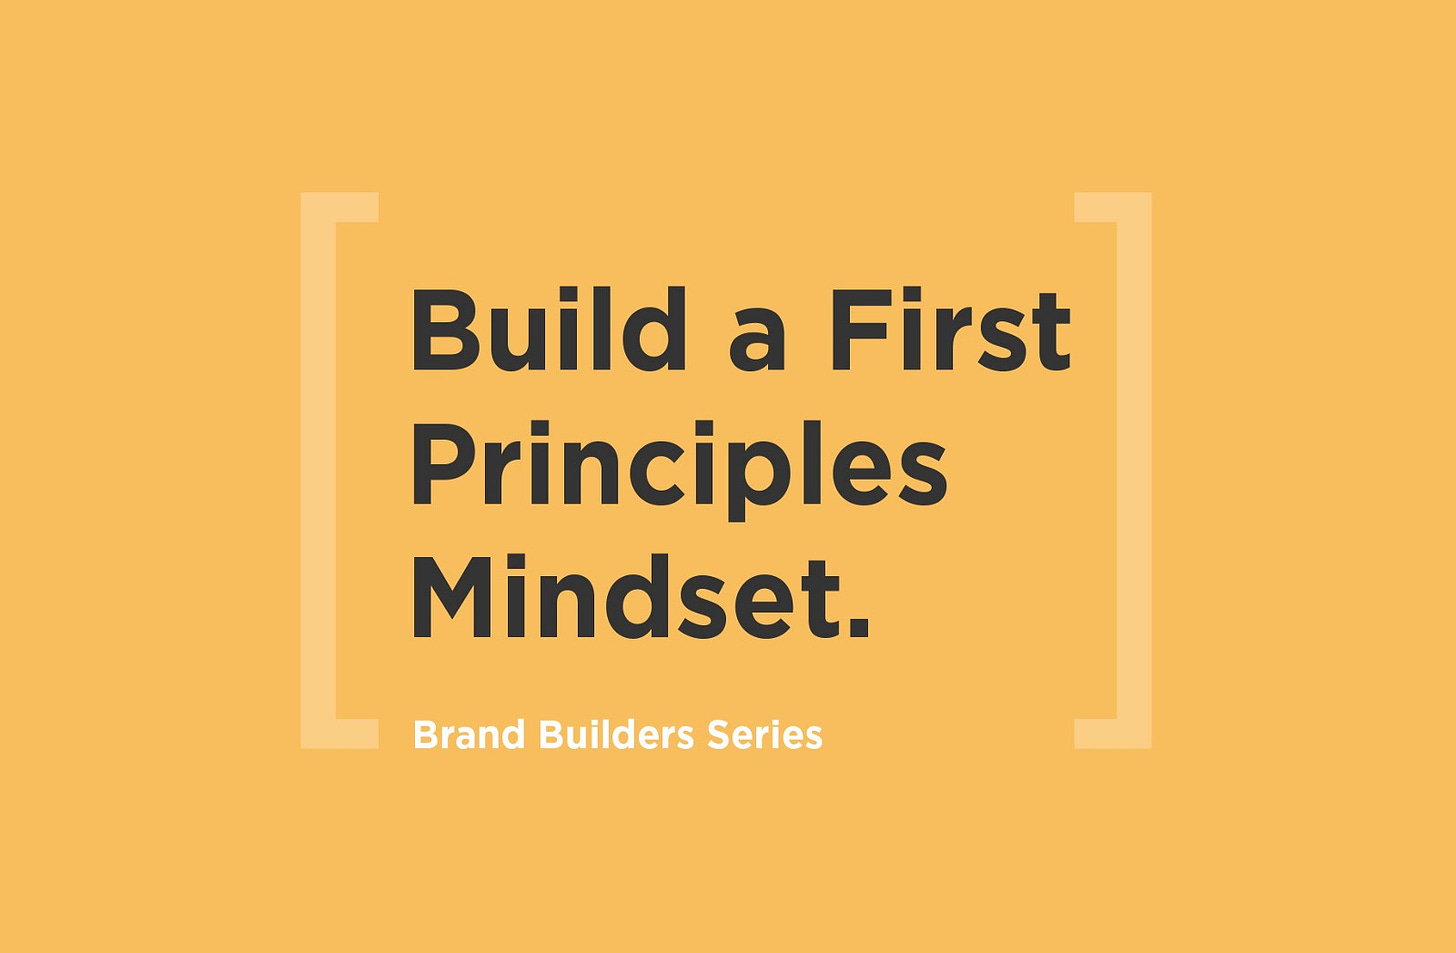 Building a First Principles Mindset.